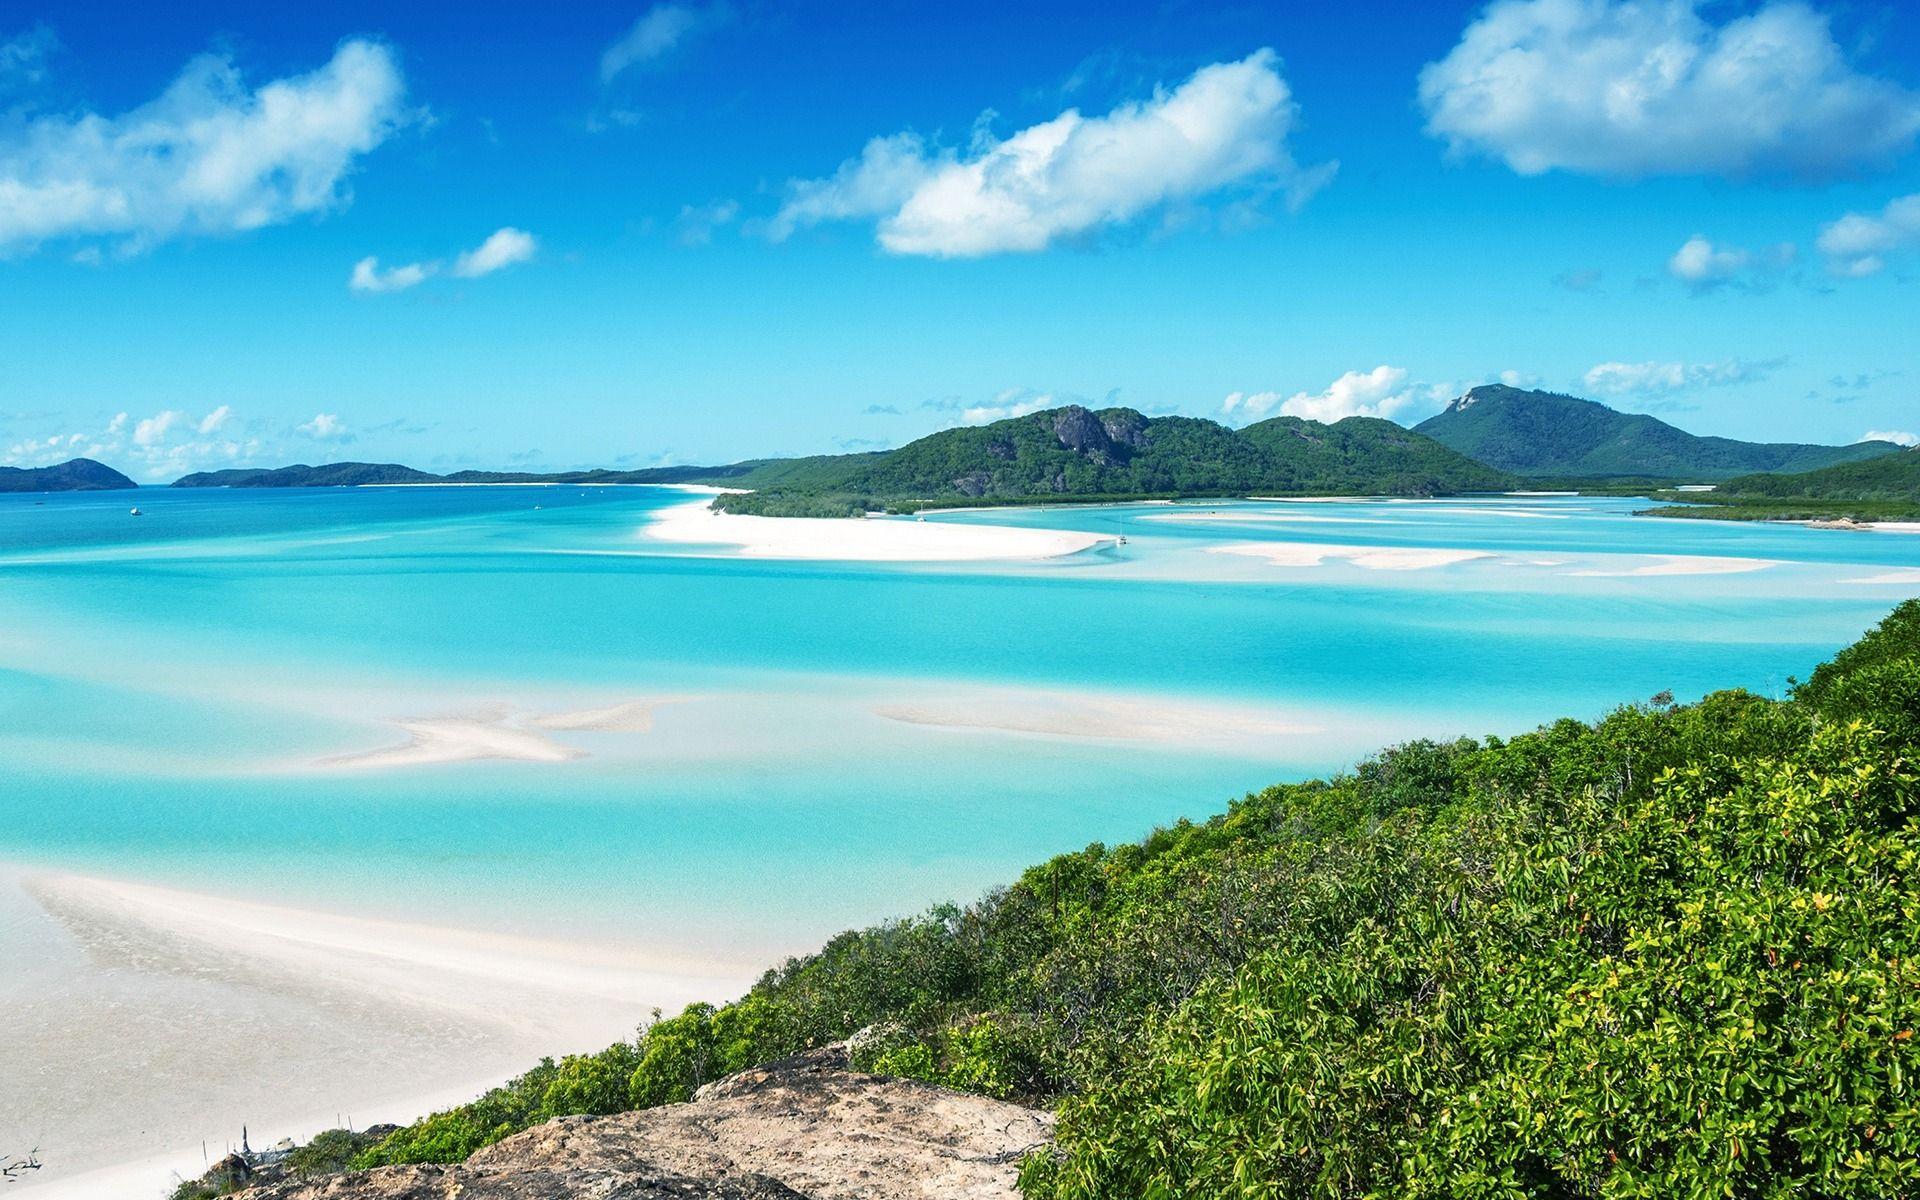 Download wallpaper Whitsunday Island, Australia, tropical island